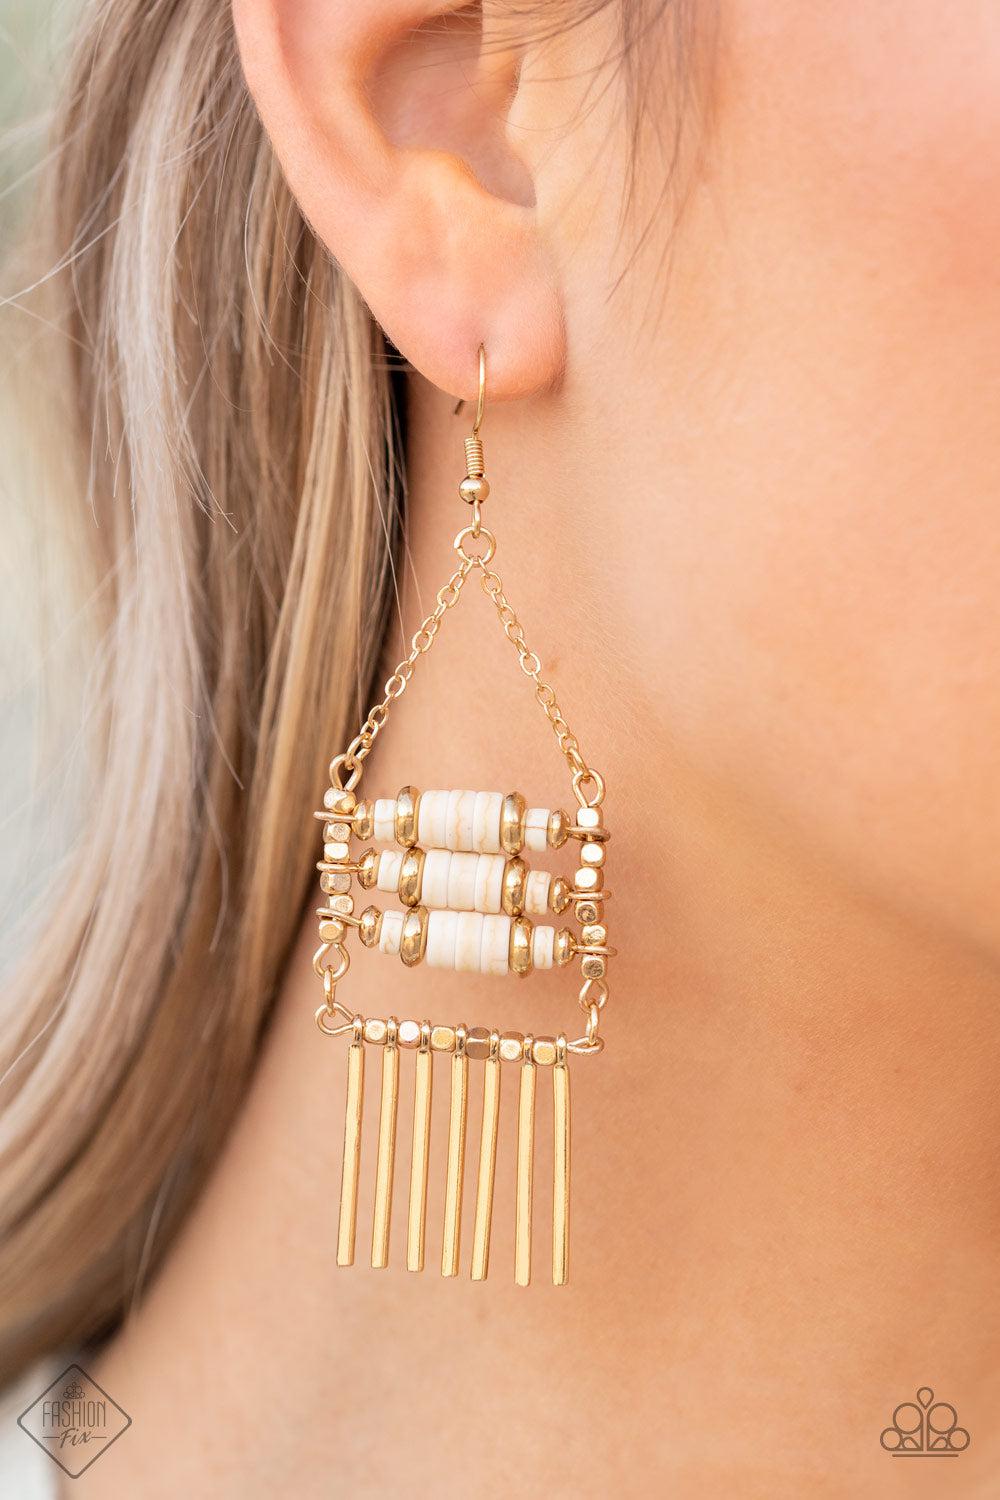 LOX Mega-grip earring - Secret Fashion Fixes - Online Shop